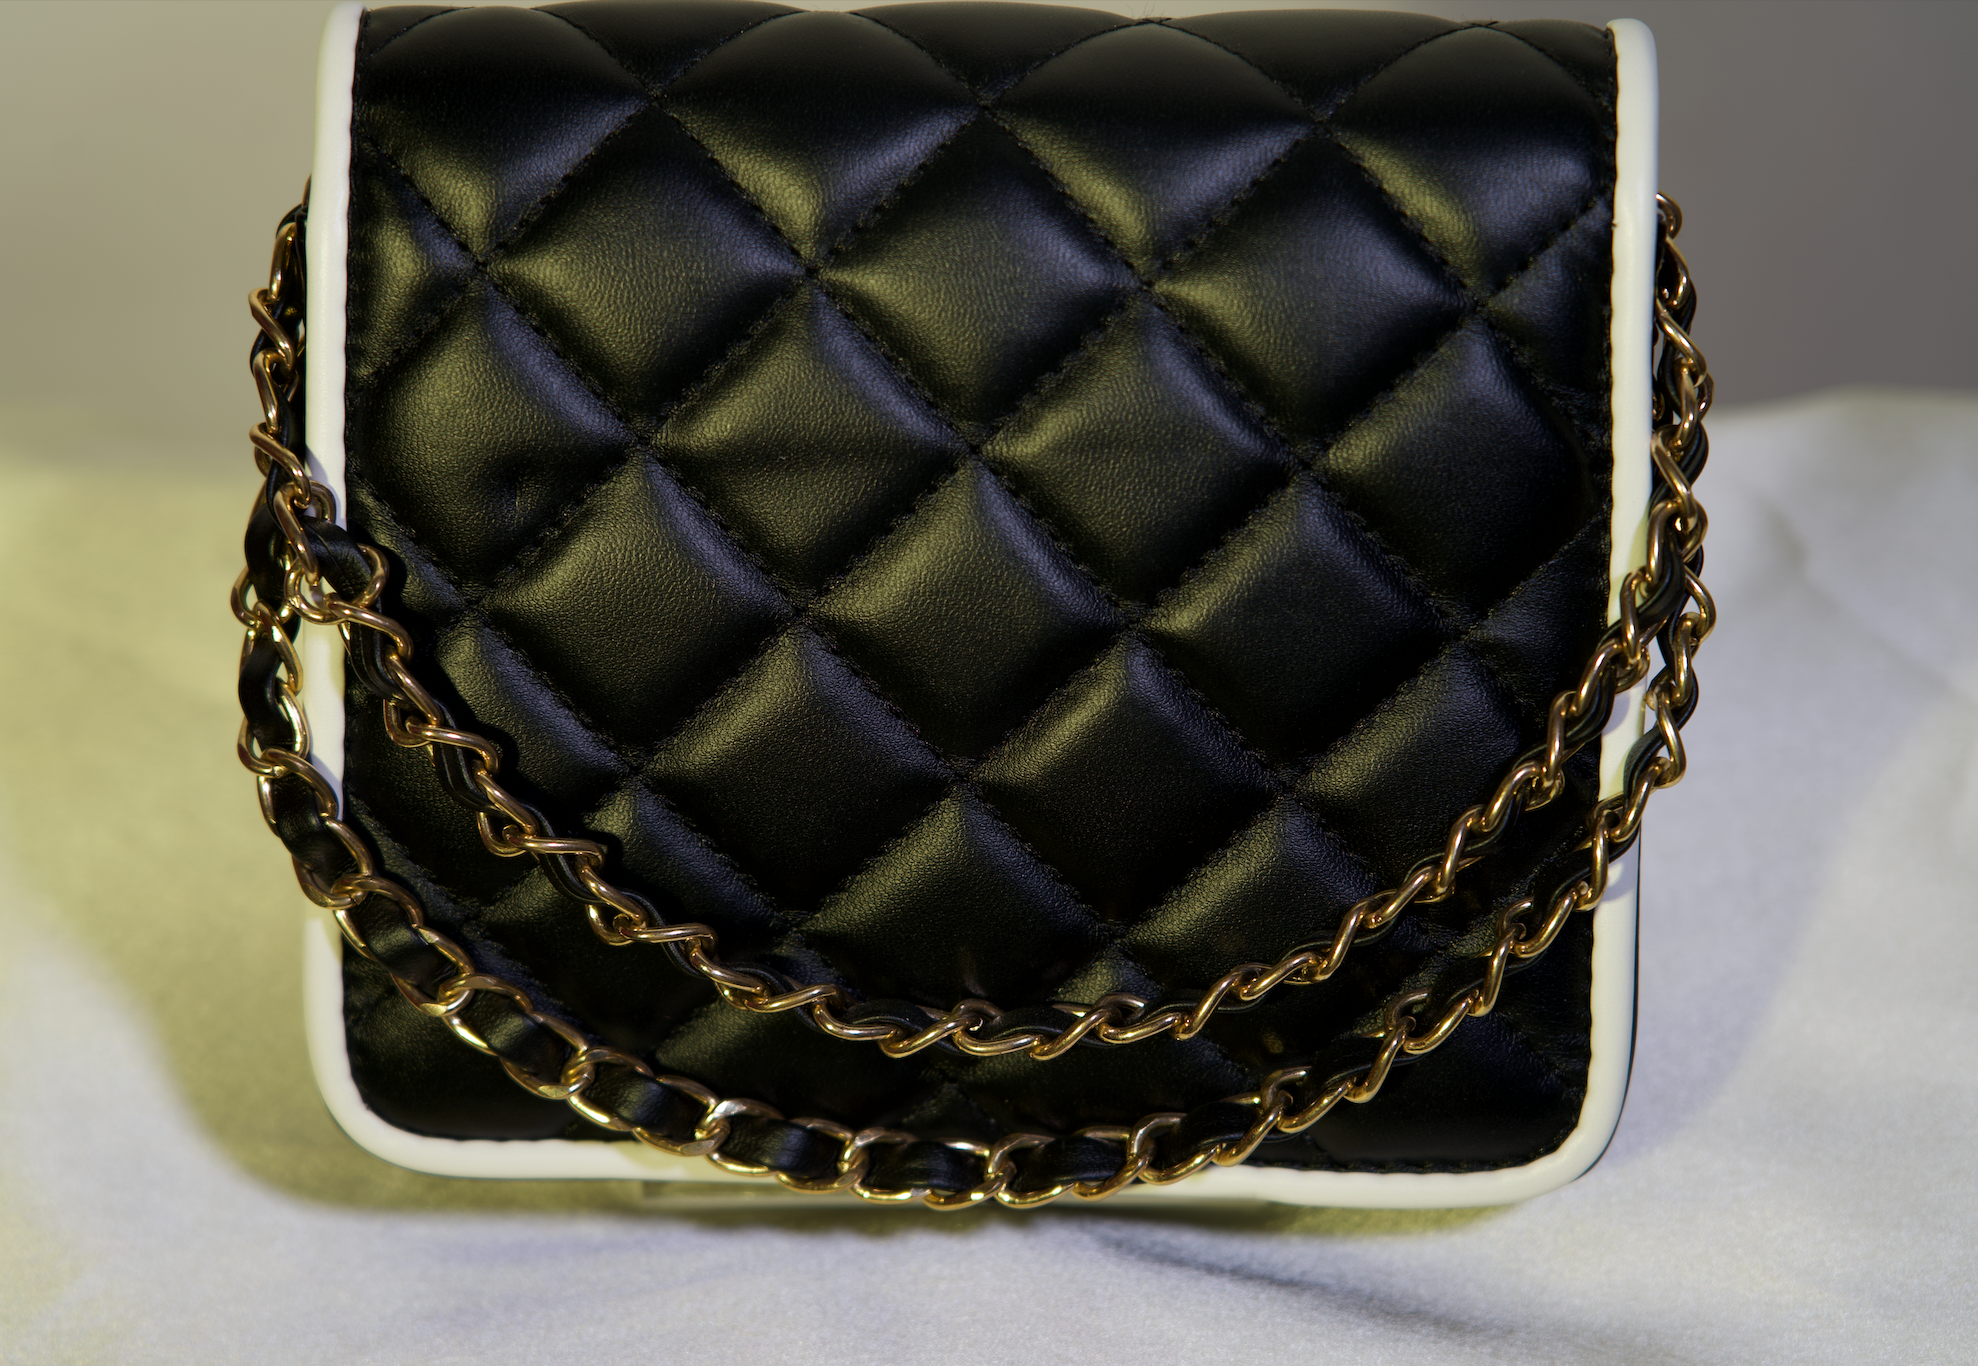 Black and White Puffy Leather Handbag